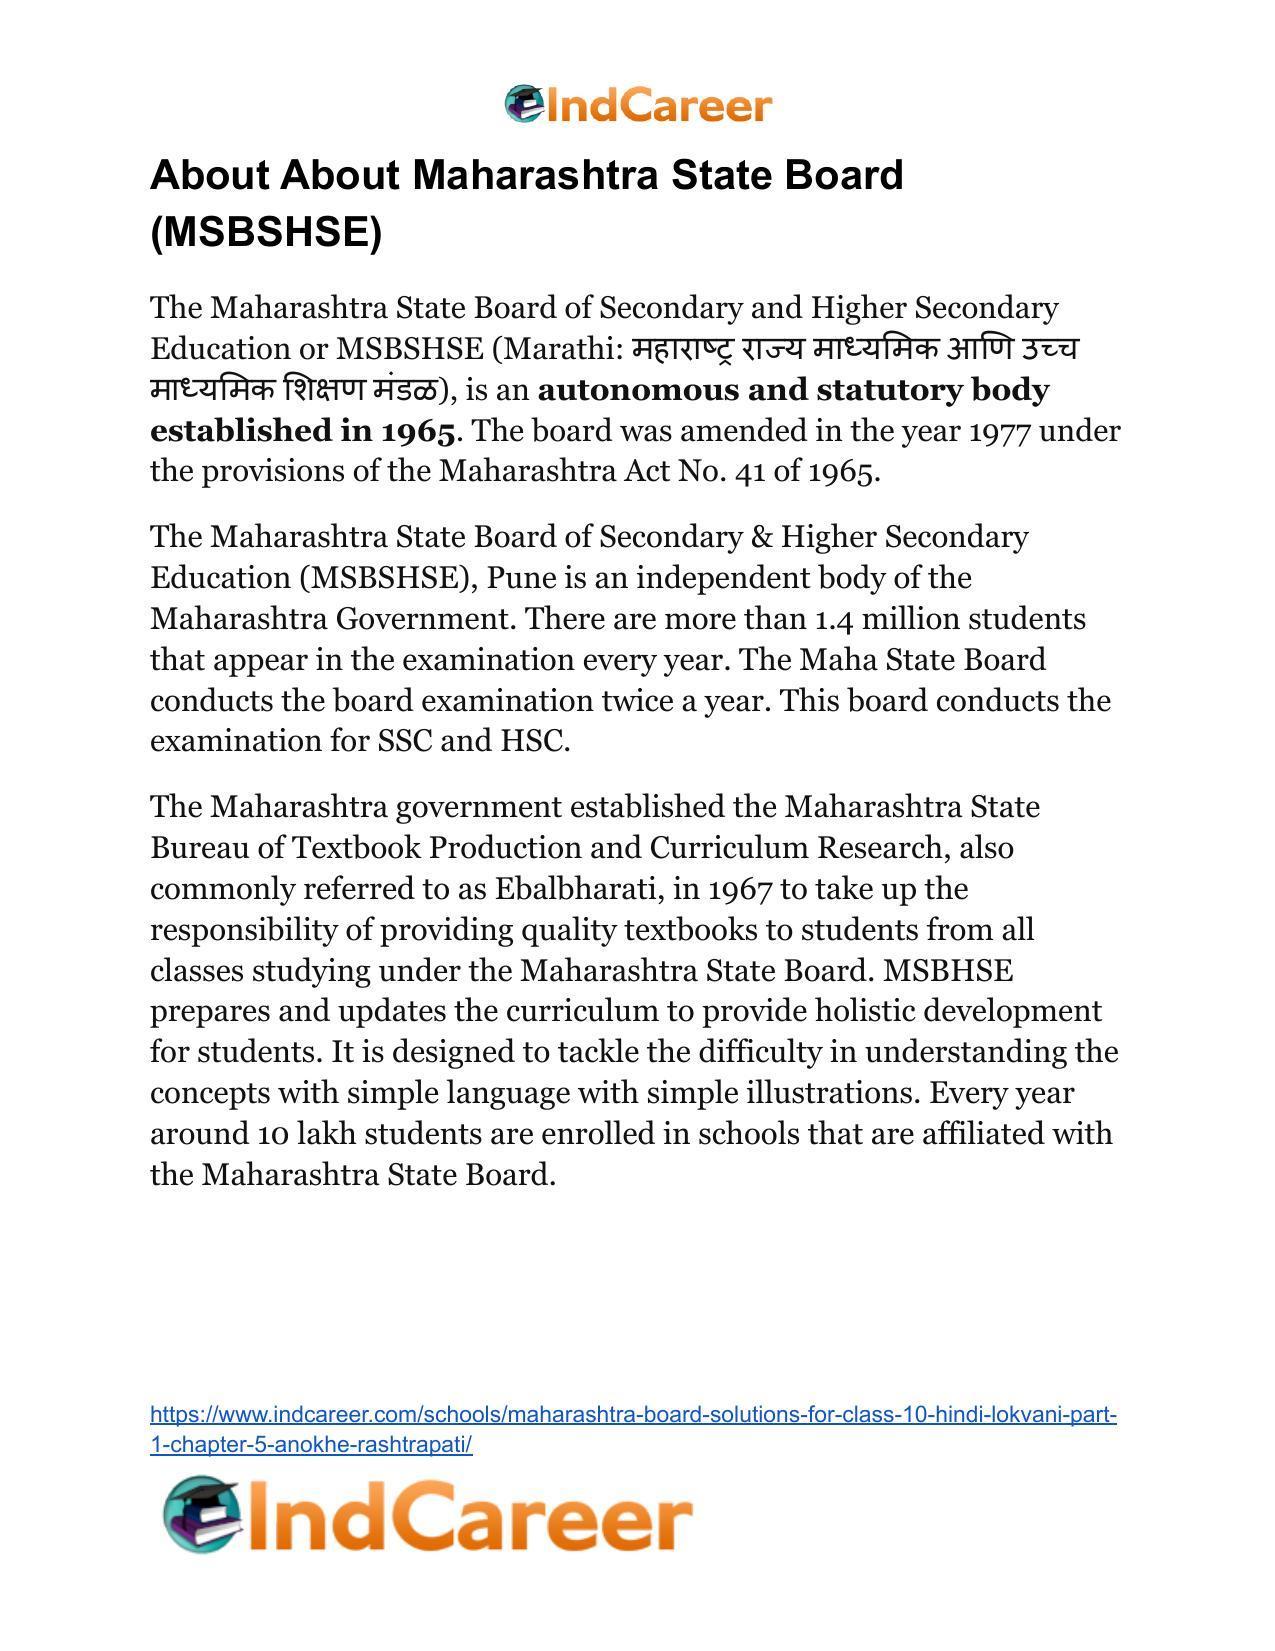 Maharashtra Board Solutions for Class 10- Hindi Lokvani (Part 1): Chapter 5- अनोखे राष्ट्रपति - Page 40